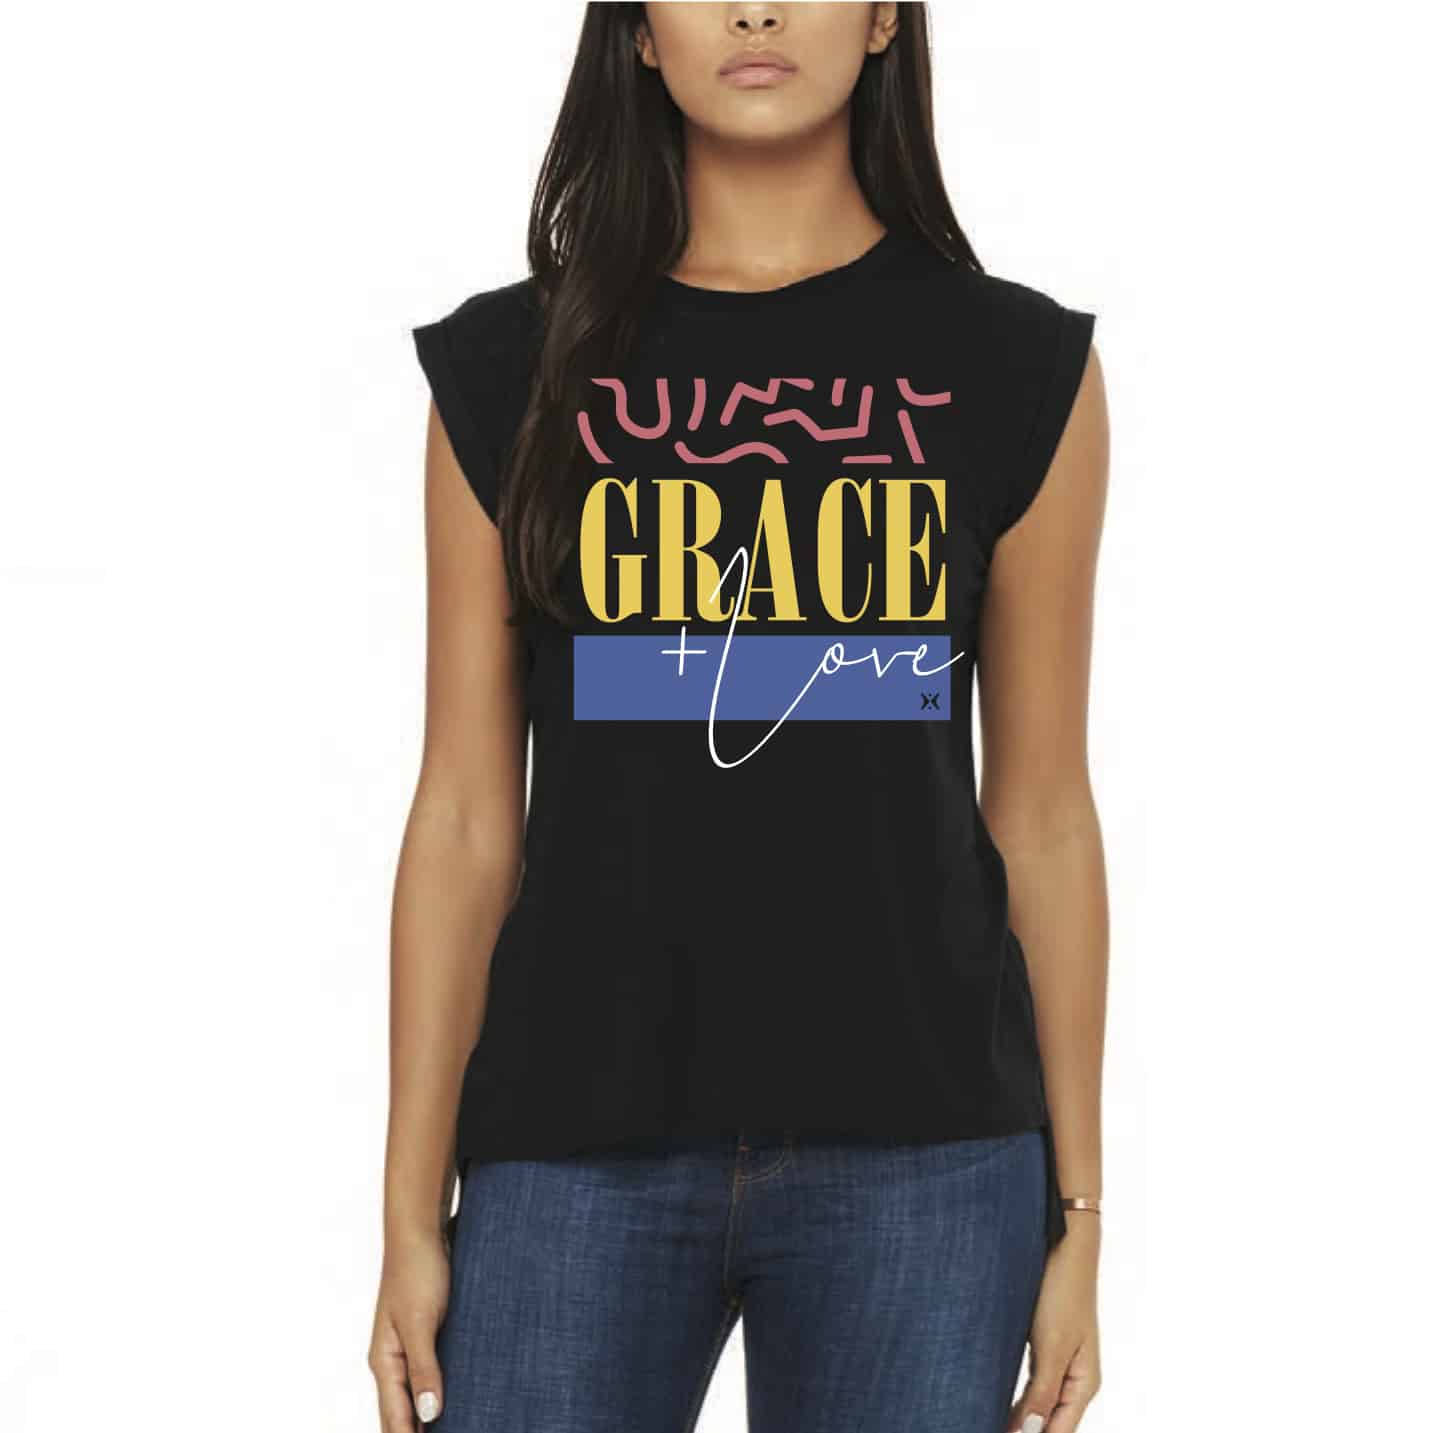 Saved by Grace Women's T-Shirt